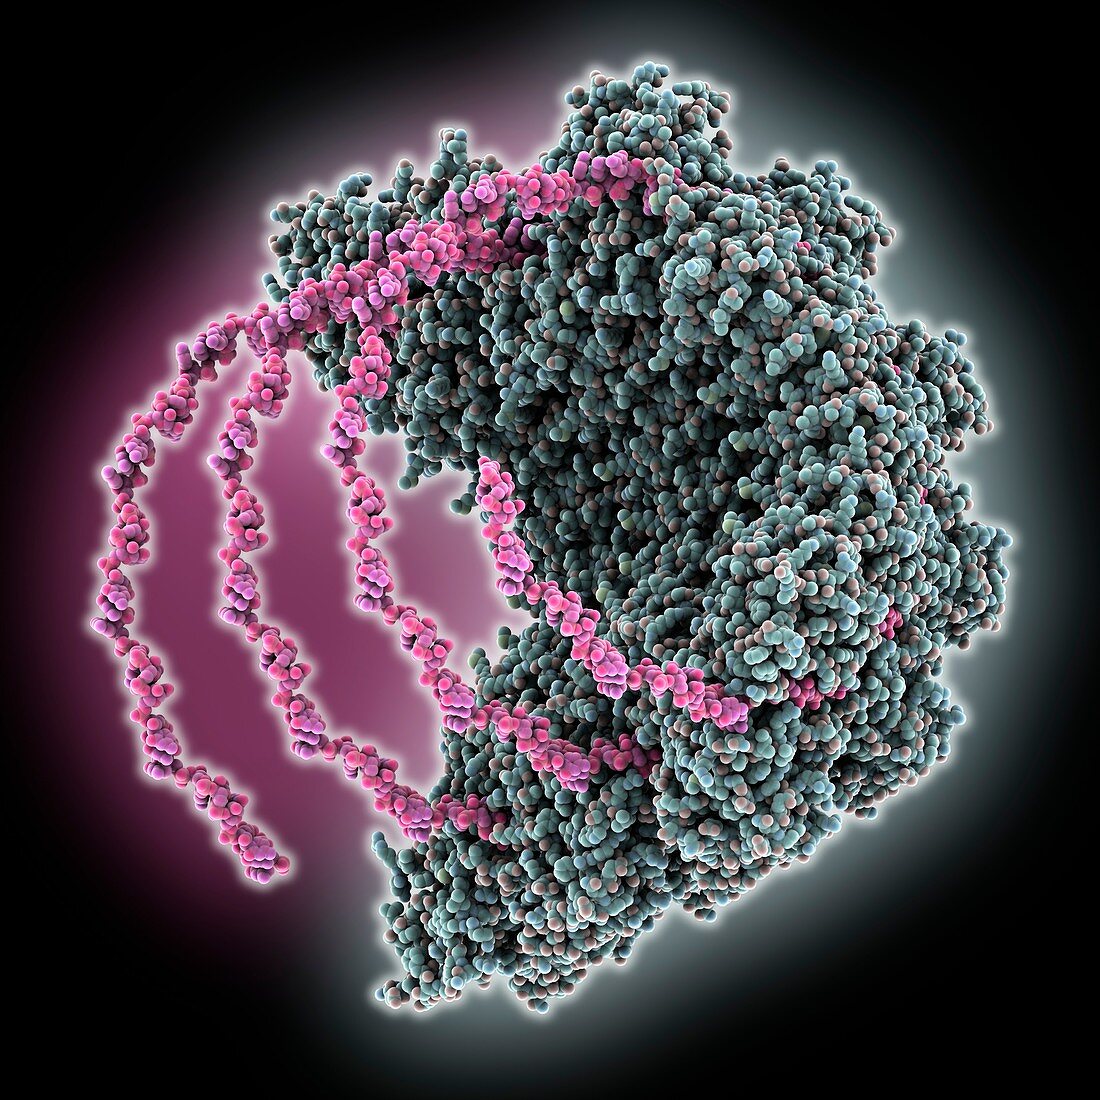 Measles virus helical nucleocapsid